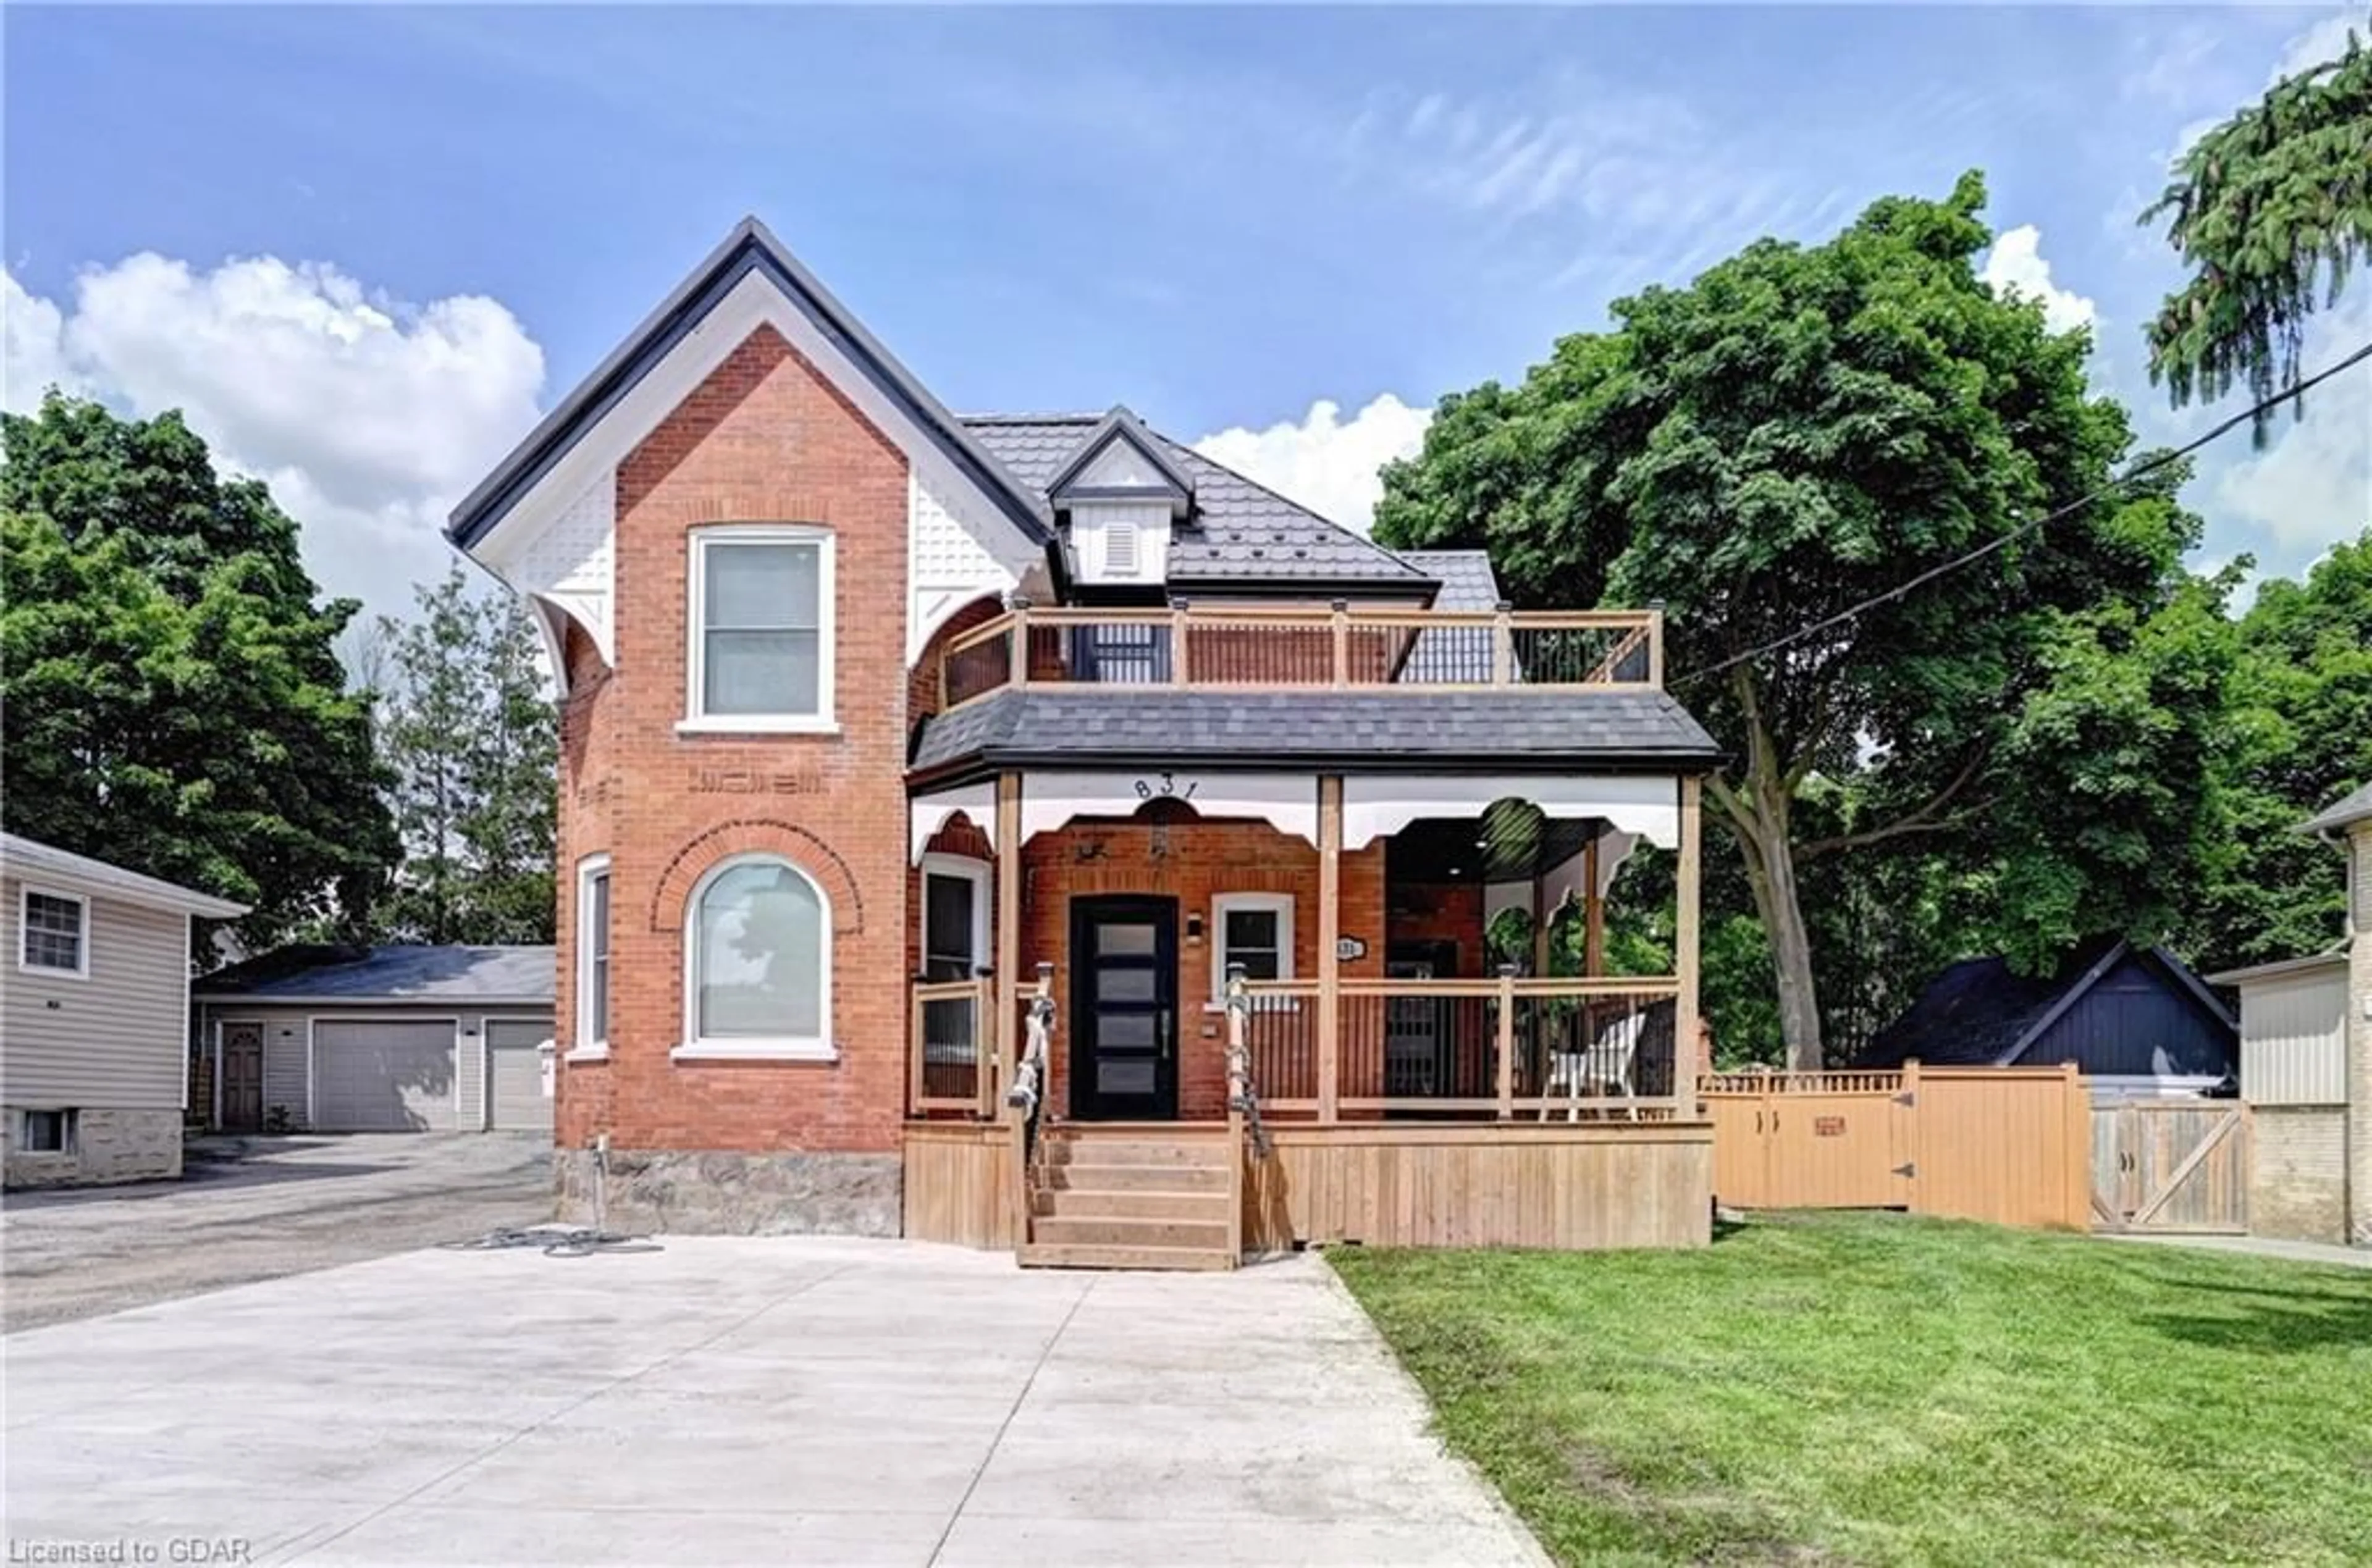 Home with brick exterior material for 831 Hamilton St, Cambridge Ontario N3H 3E7